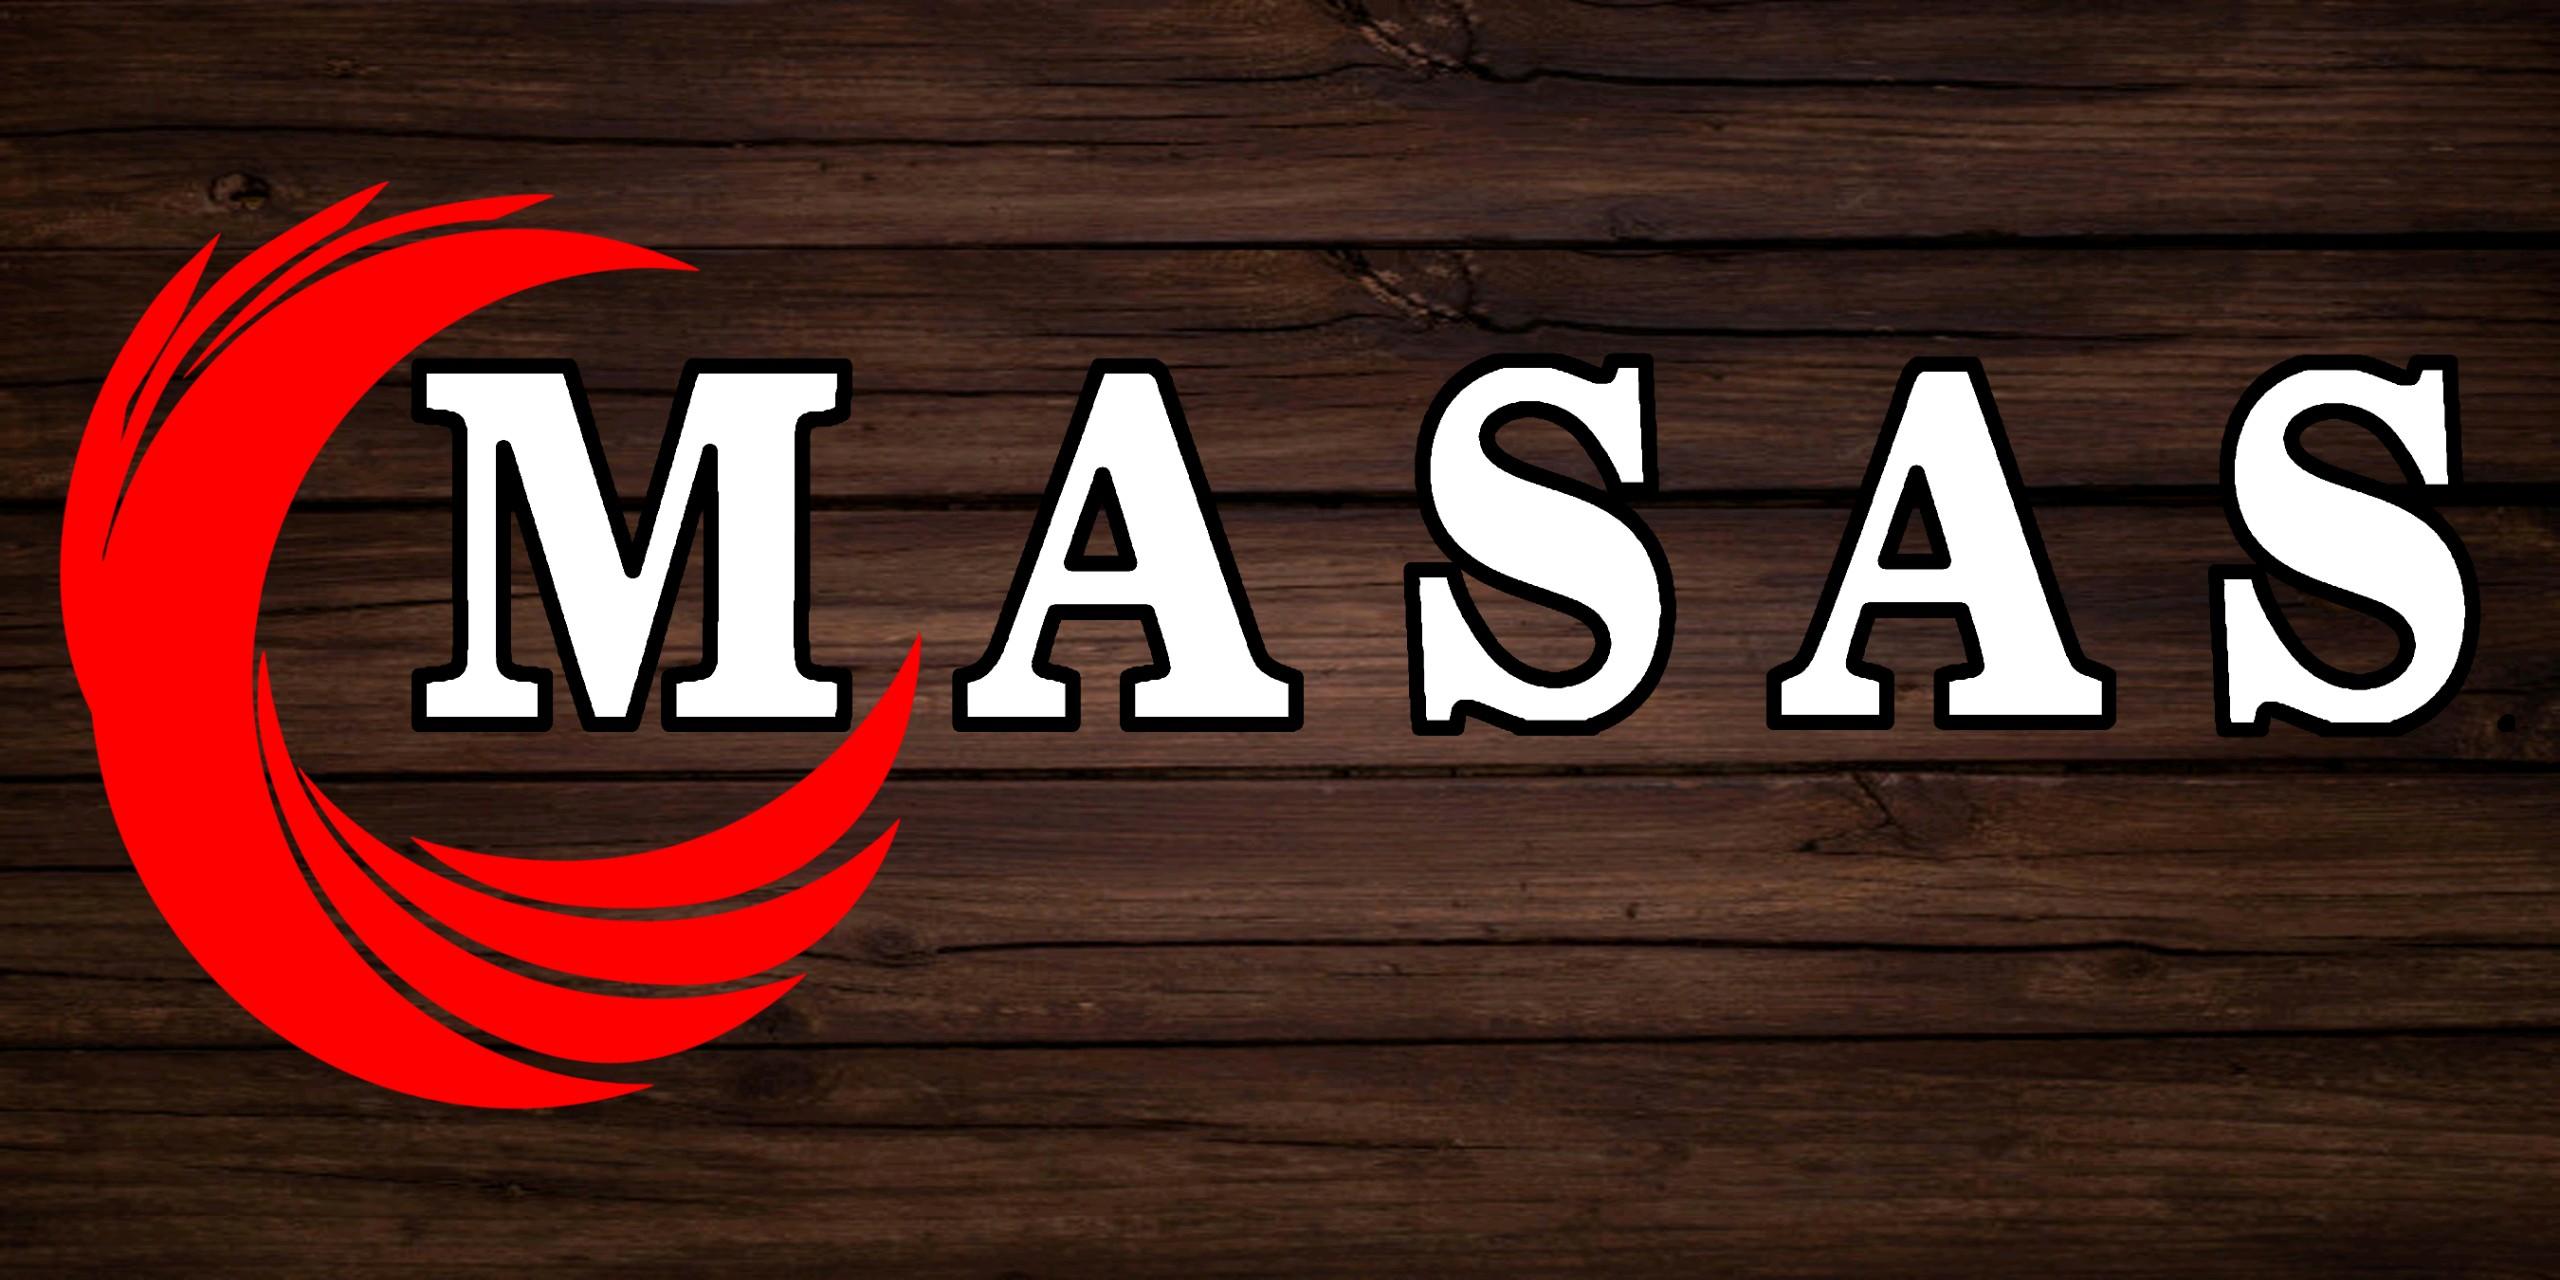 MASAS Pizza logo